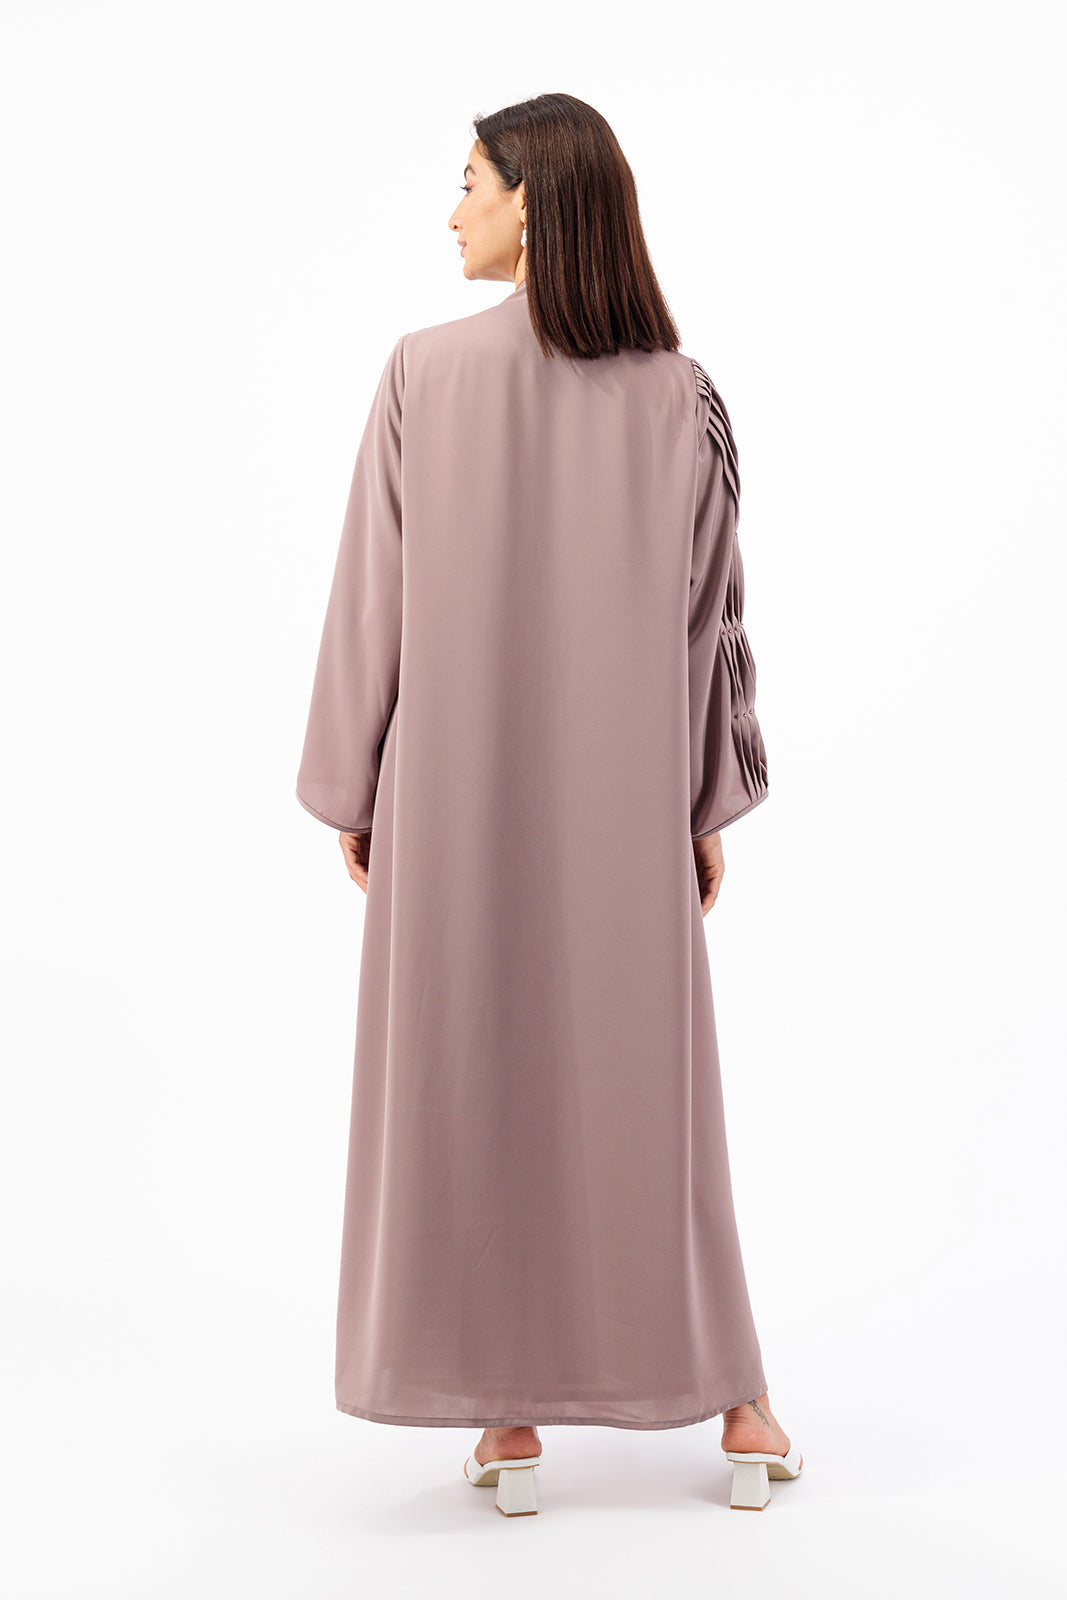 Asymmetrical single pleated Abaya